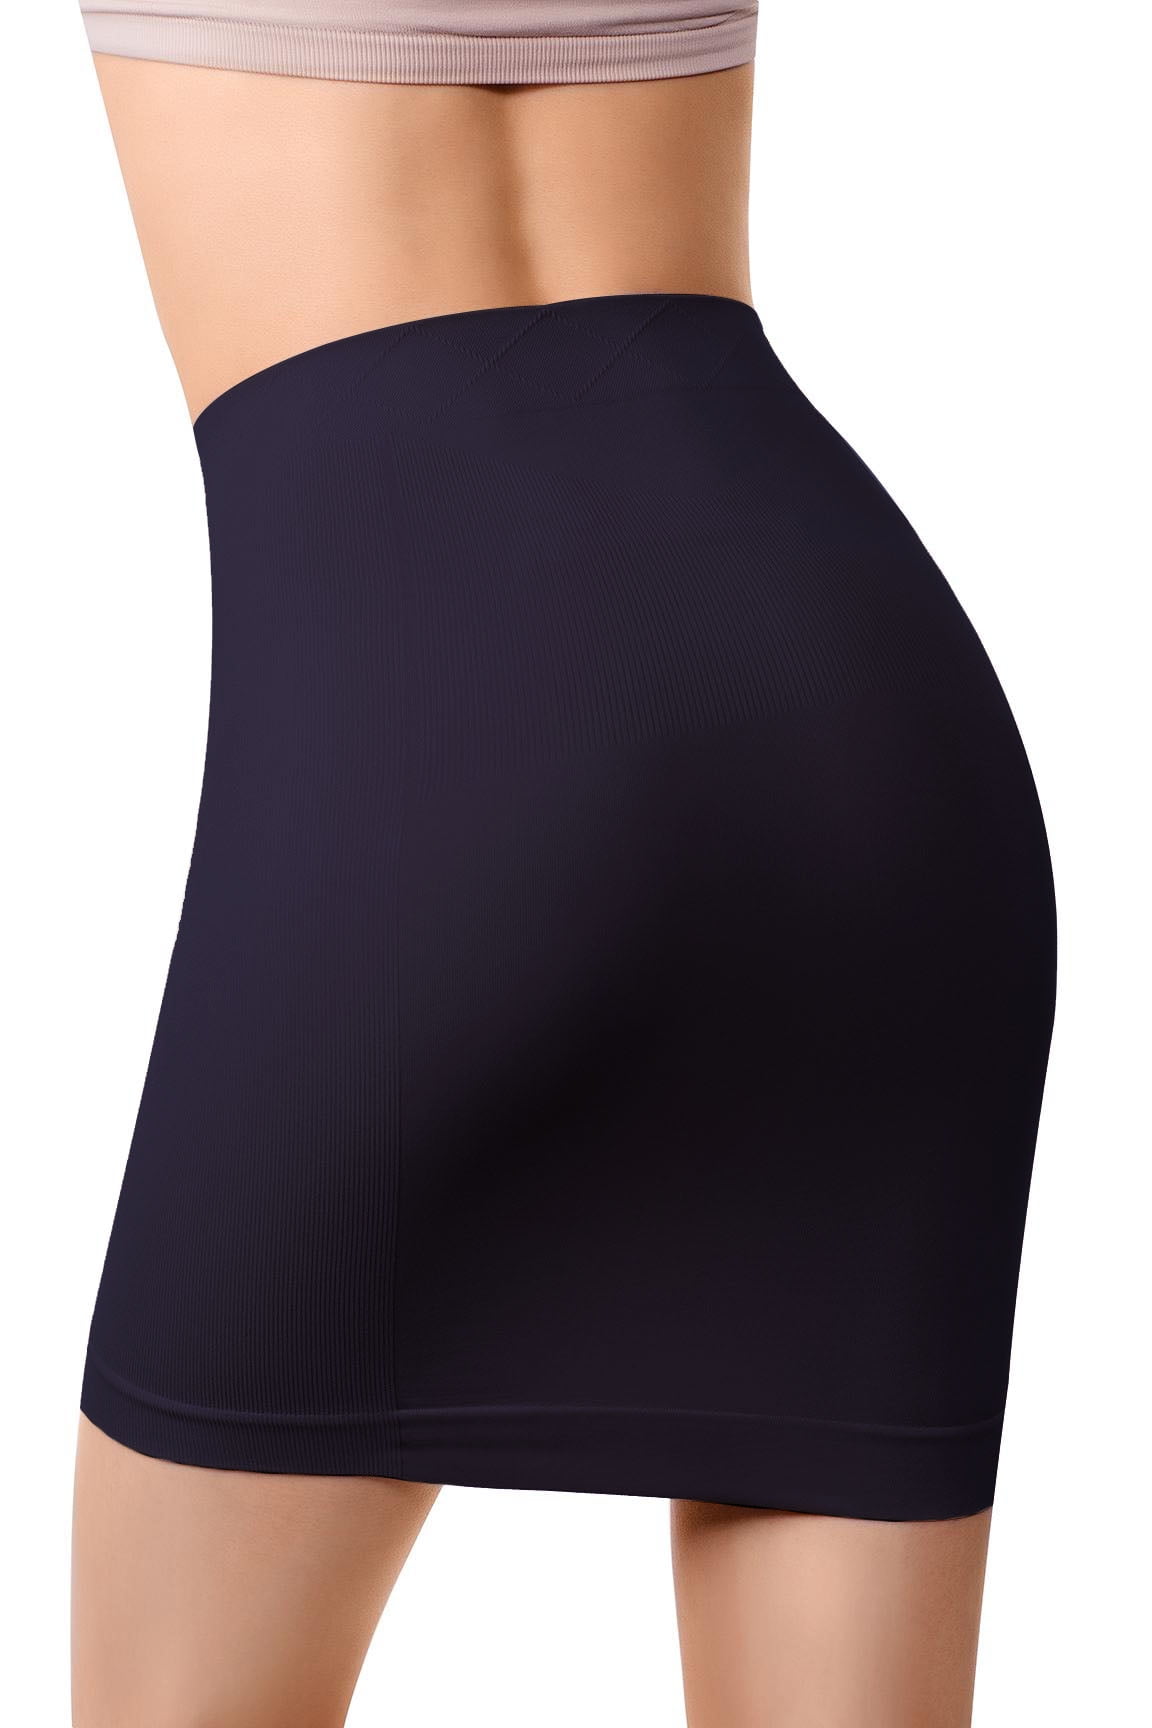 MD Women's Shapewear High Waisted Nylon Firm Tummy Control Half Slip Body  Shaper Black Small 